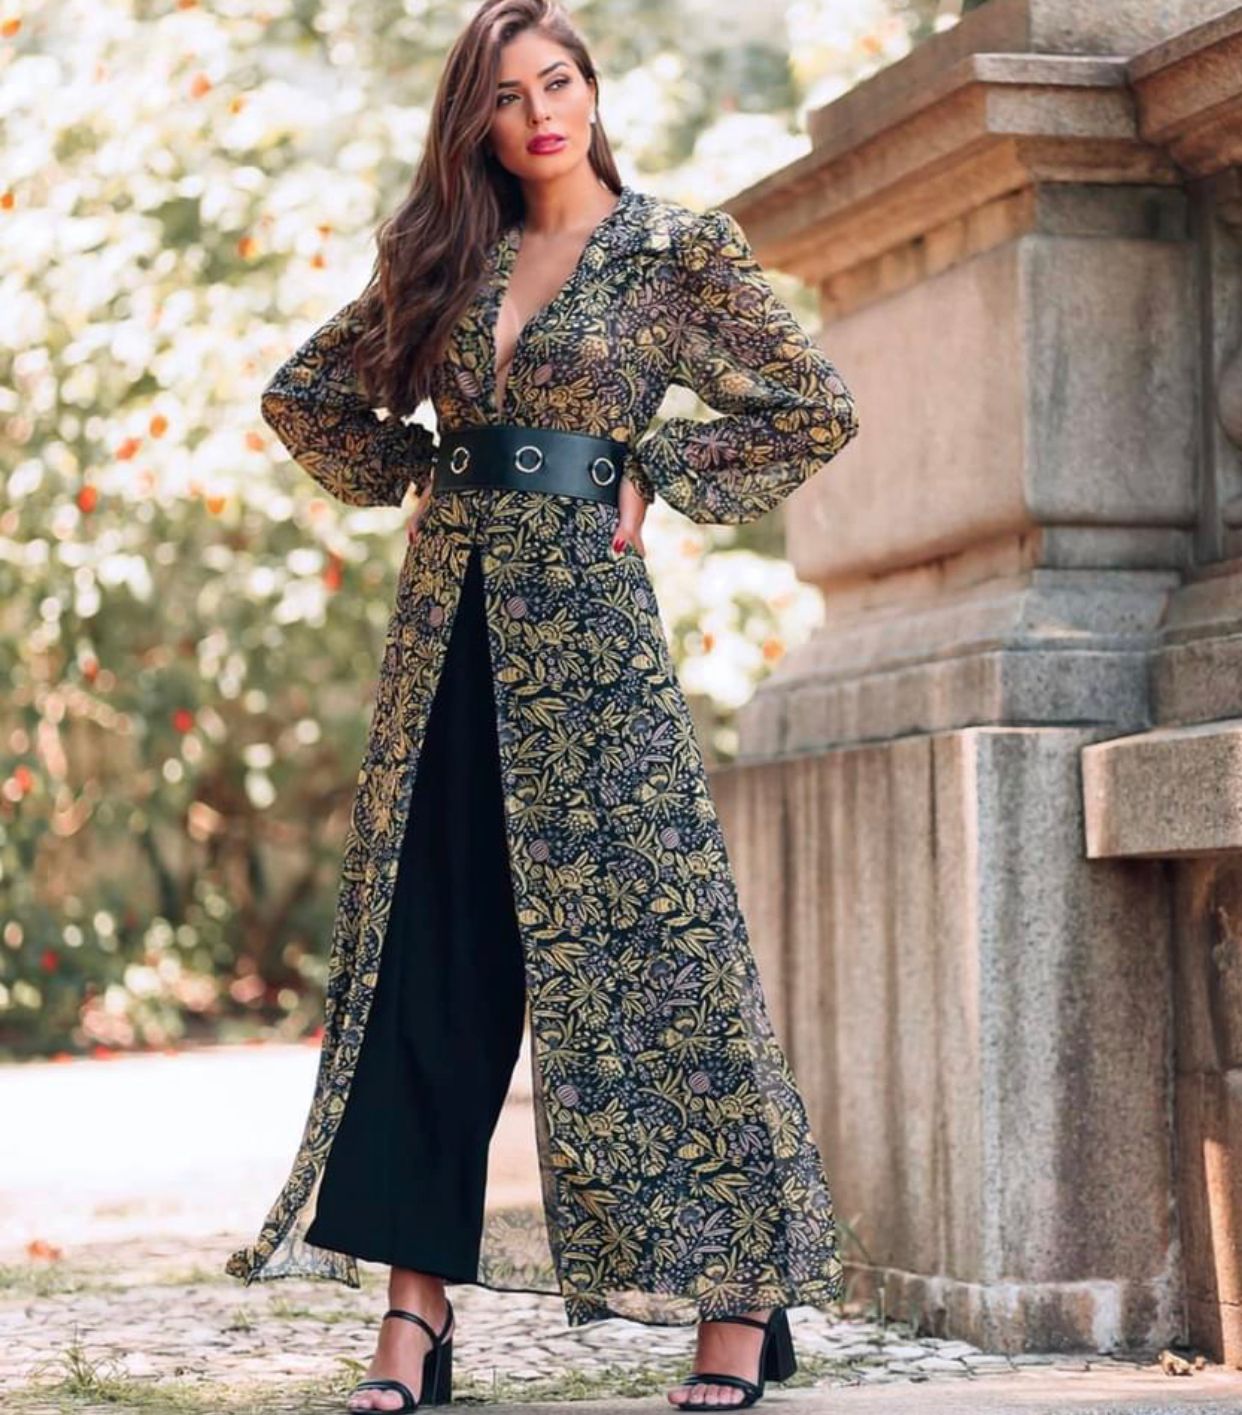 Top Kimono Open Front satoreferreira – Long Sleeve